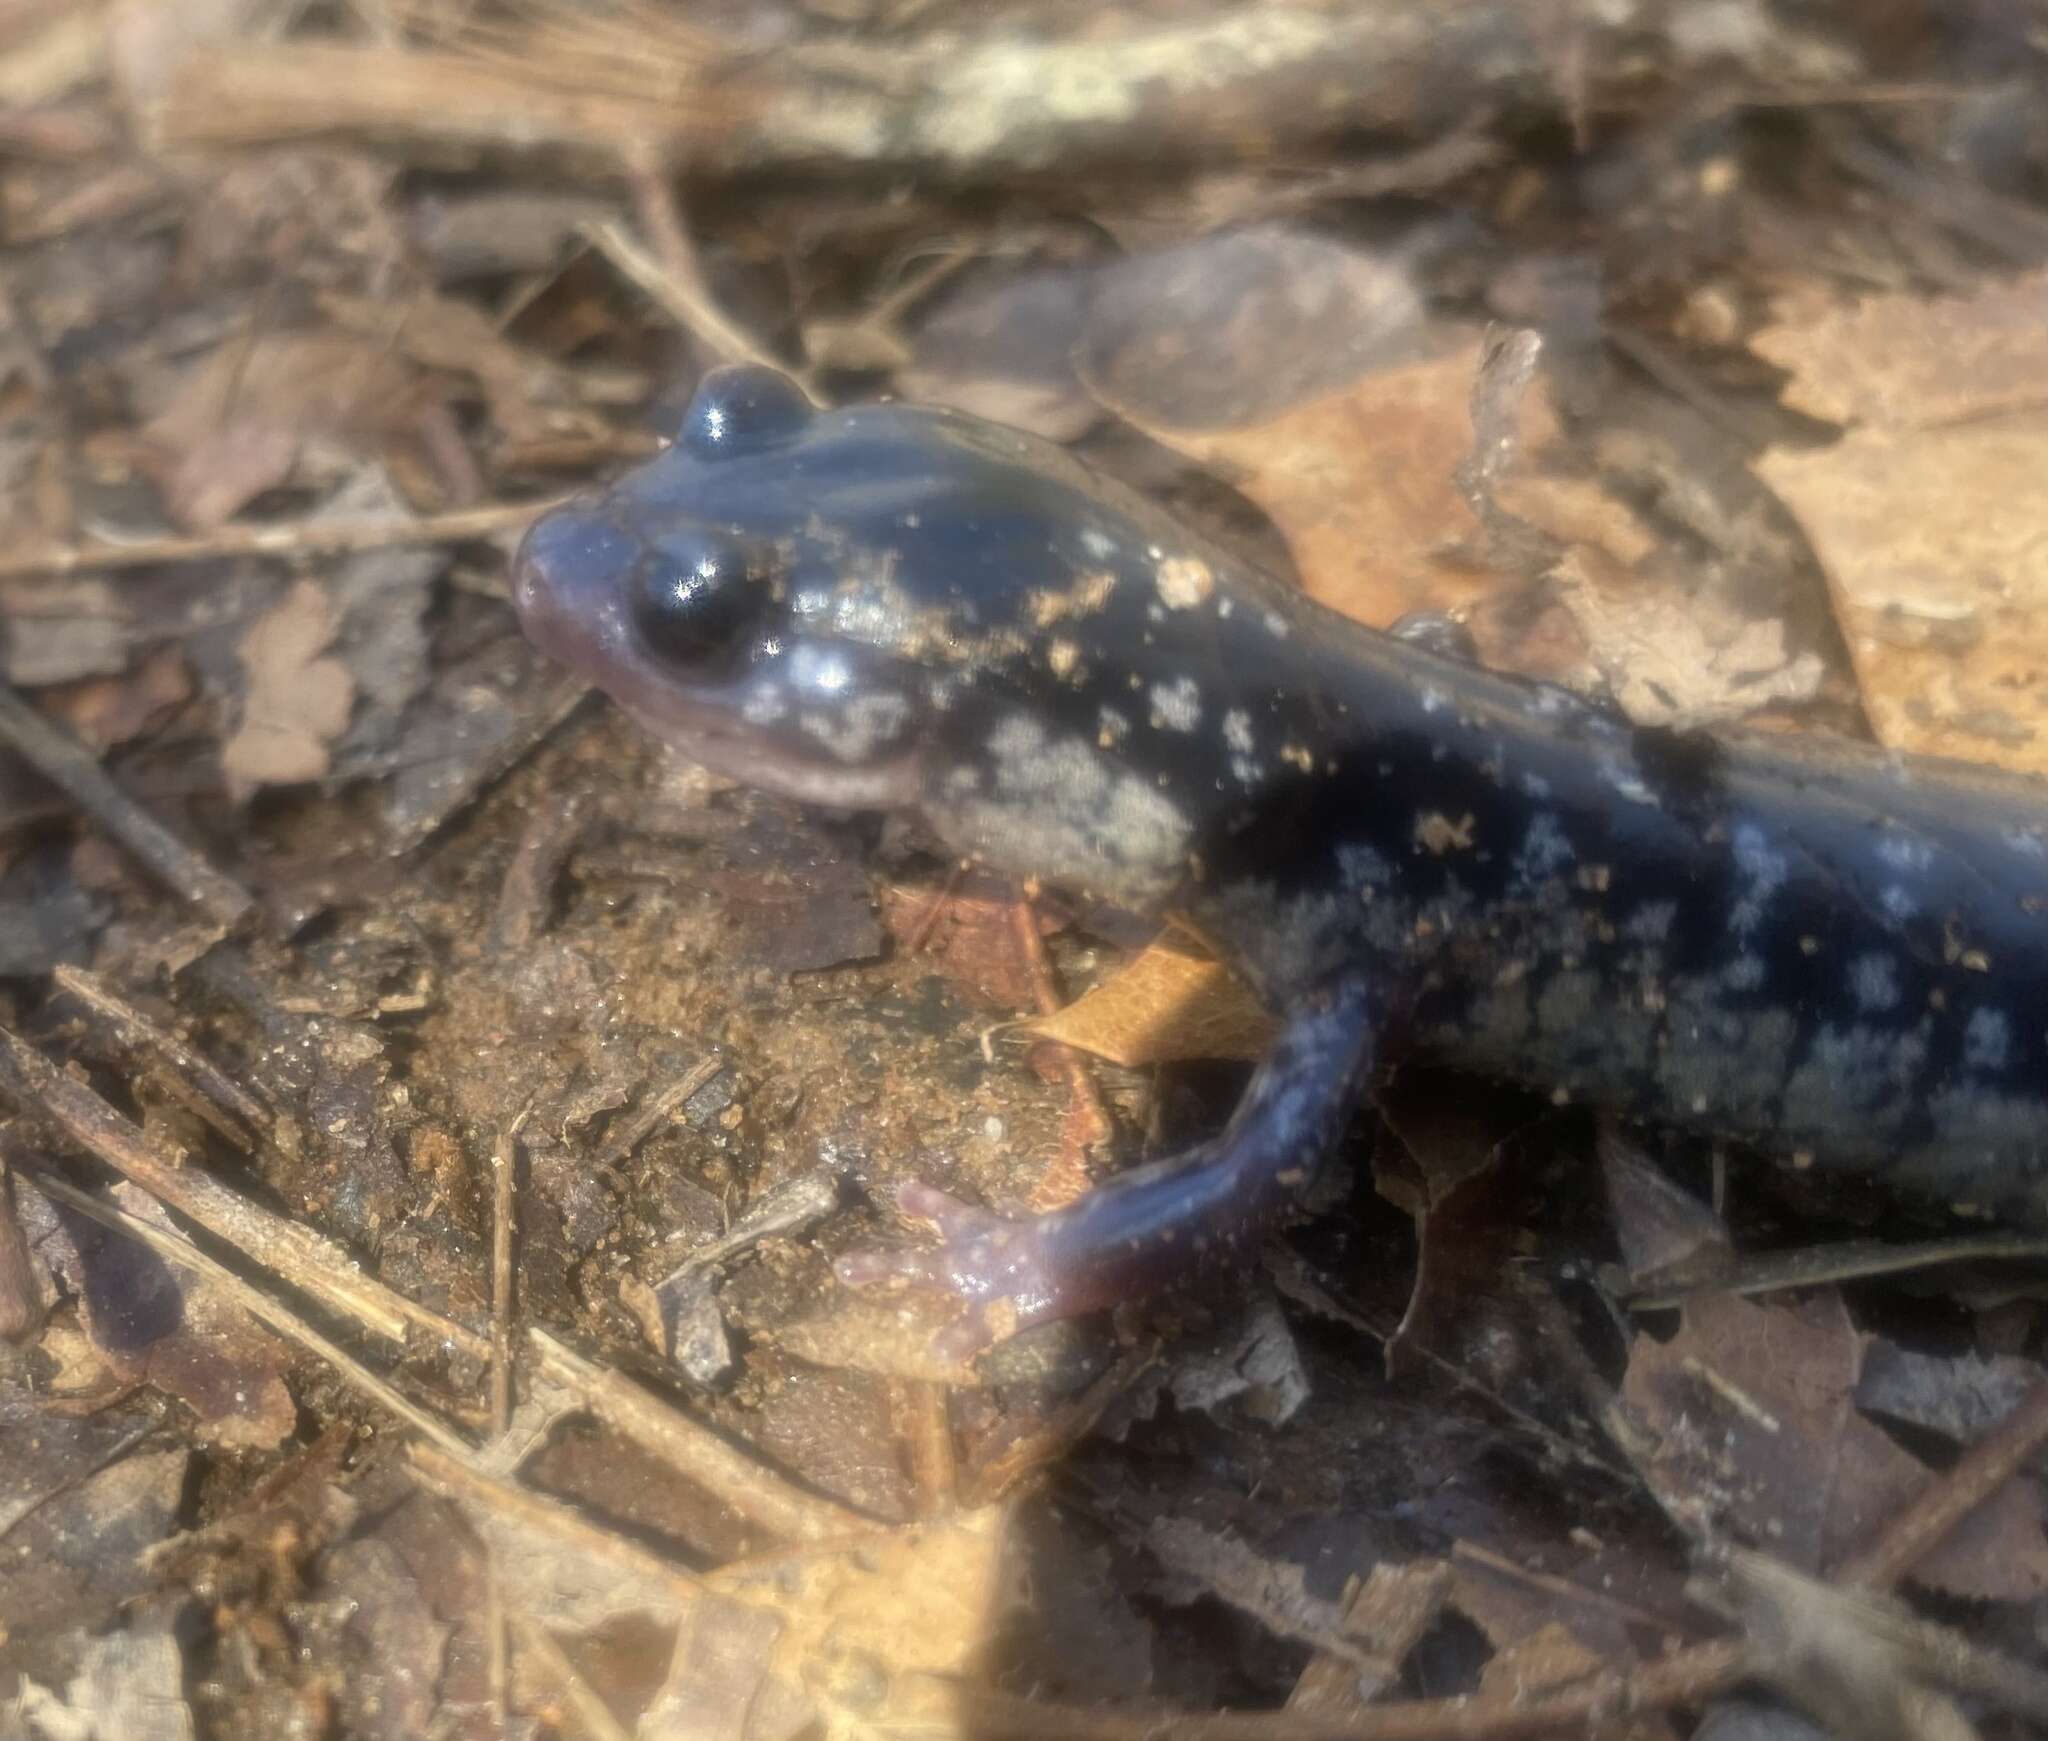 Image of Southern Appalachian Salamander